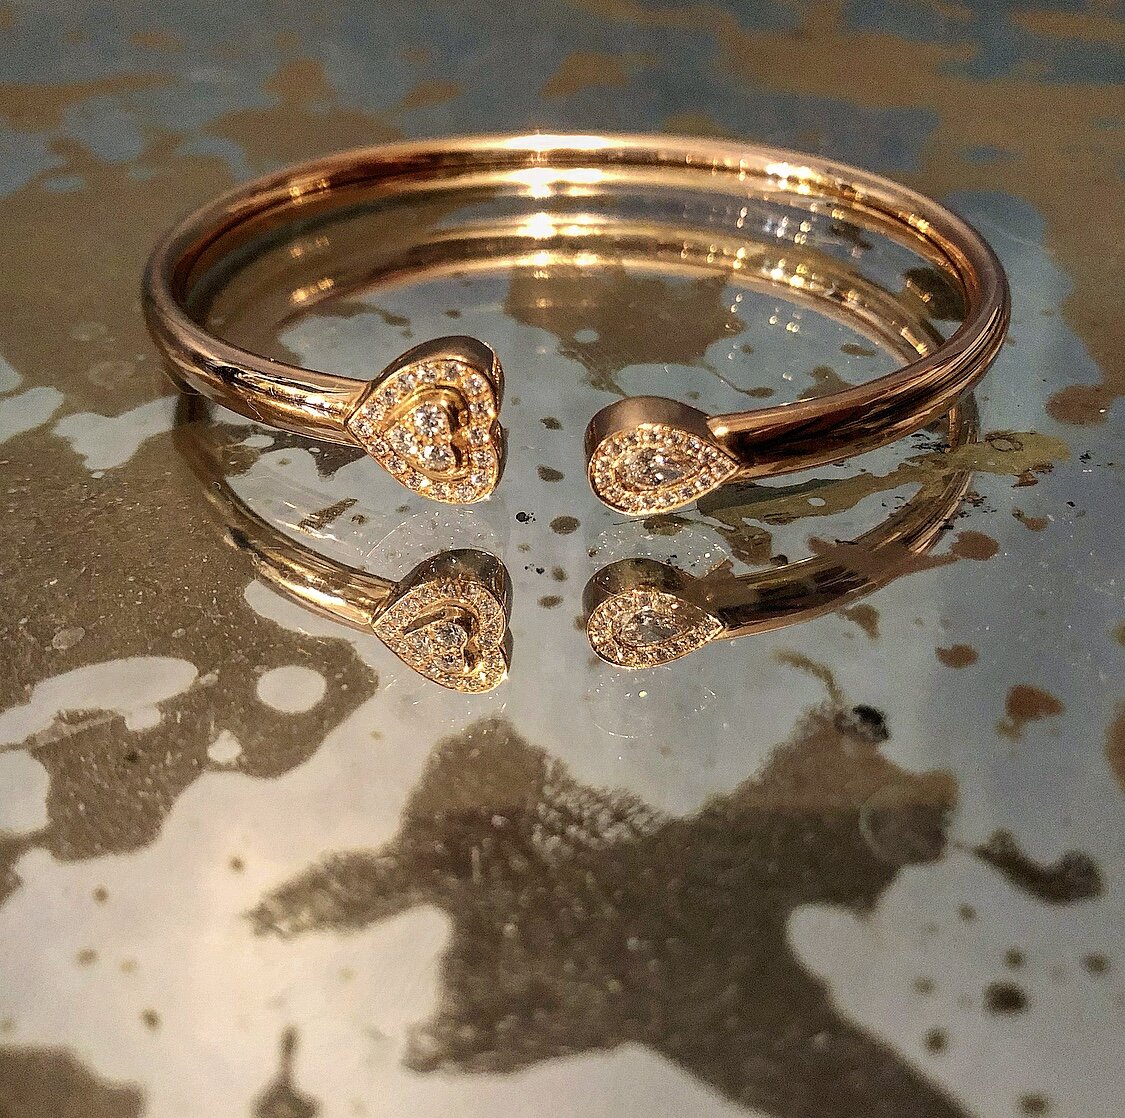 Matthia's & Claire 18K Rose Gold & Diamond Heart Cuff Bracelet, $5,095